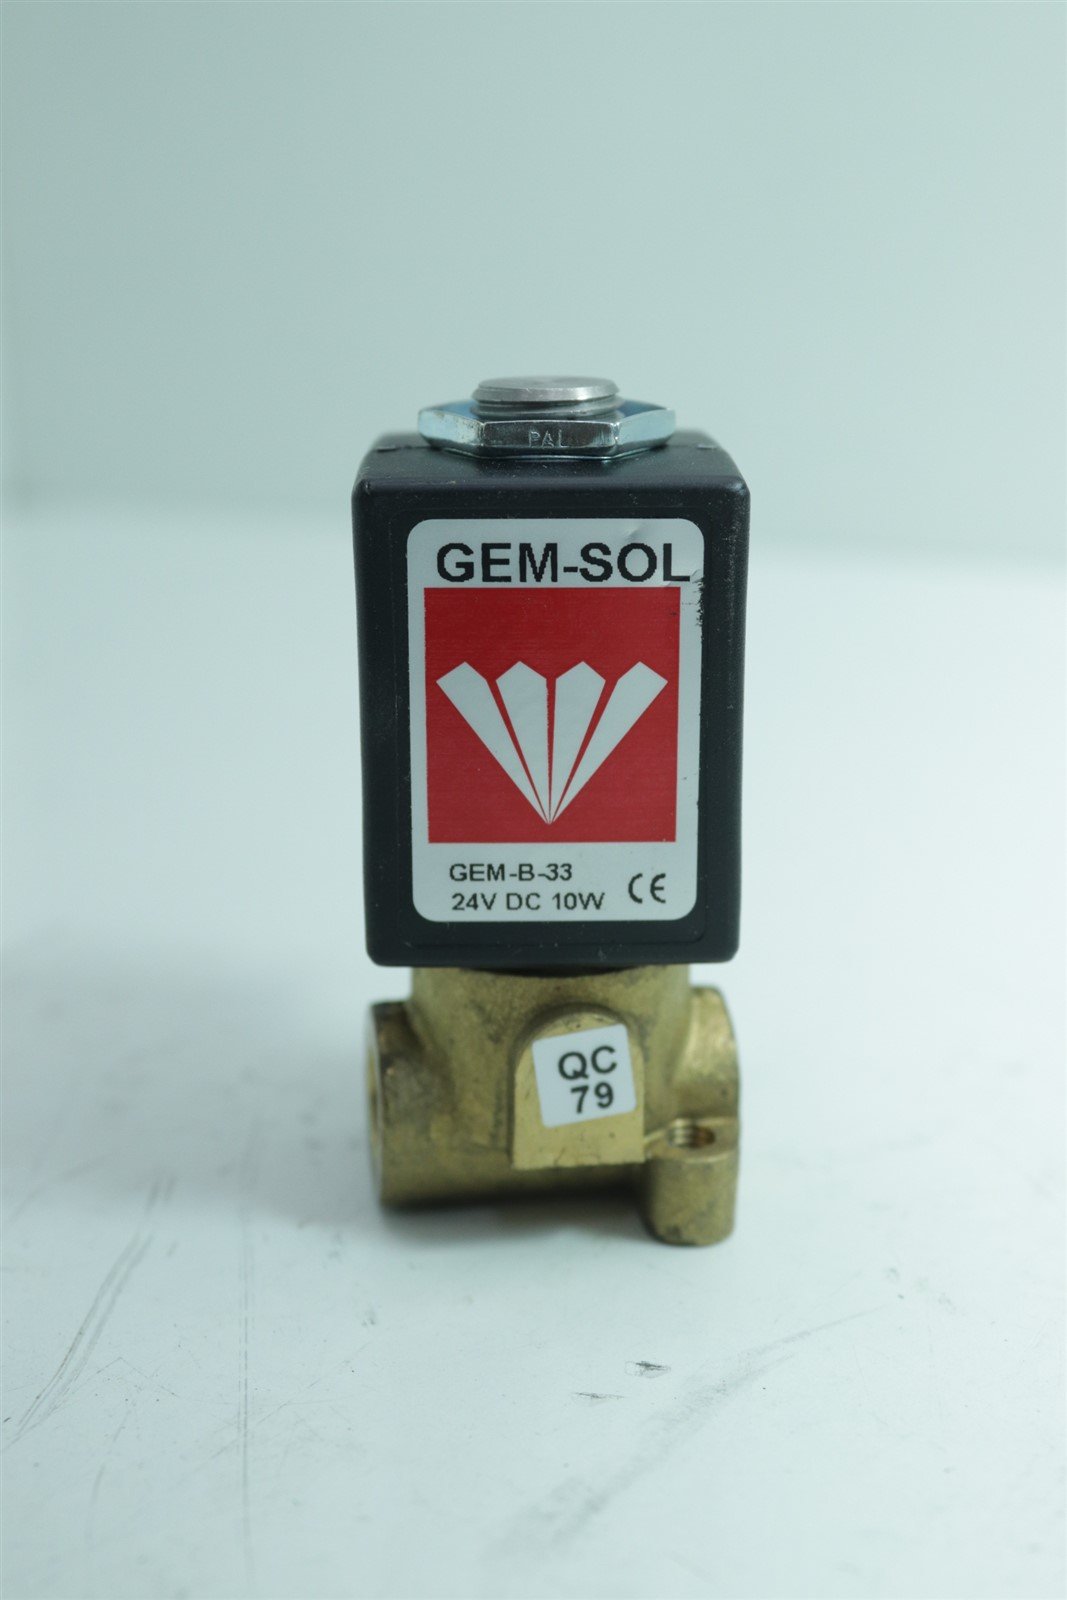 KORNIT DIGITAL Gem-sol GEM-B-33 GEM SOL valves 10w 24v dc